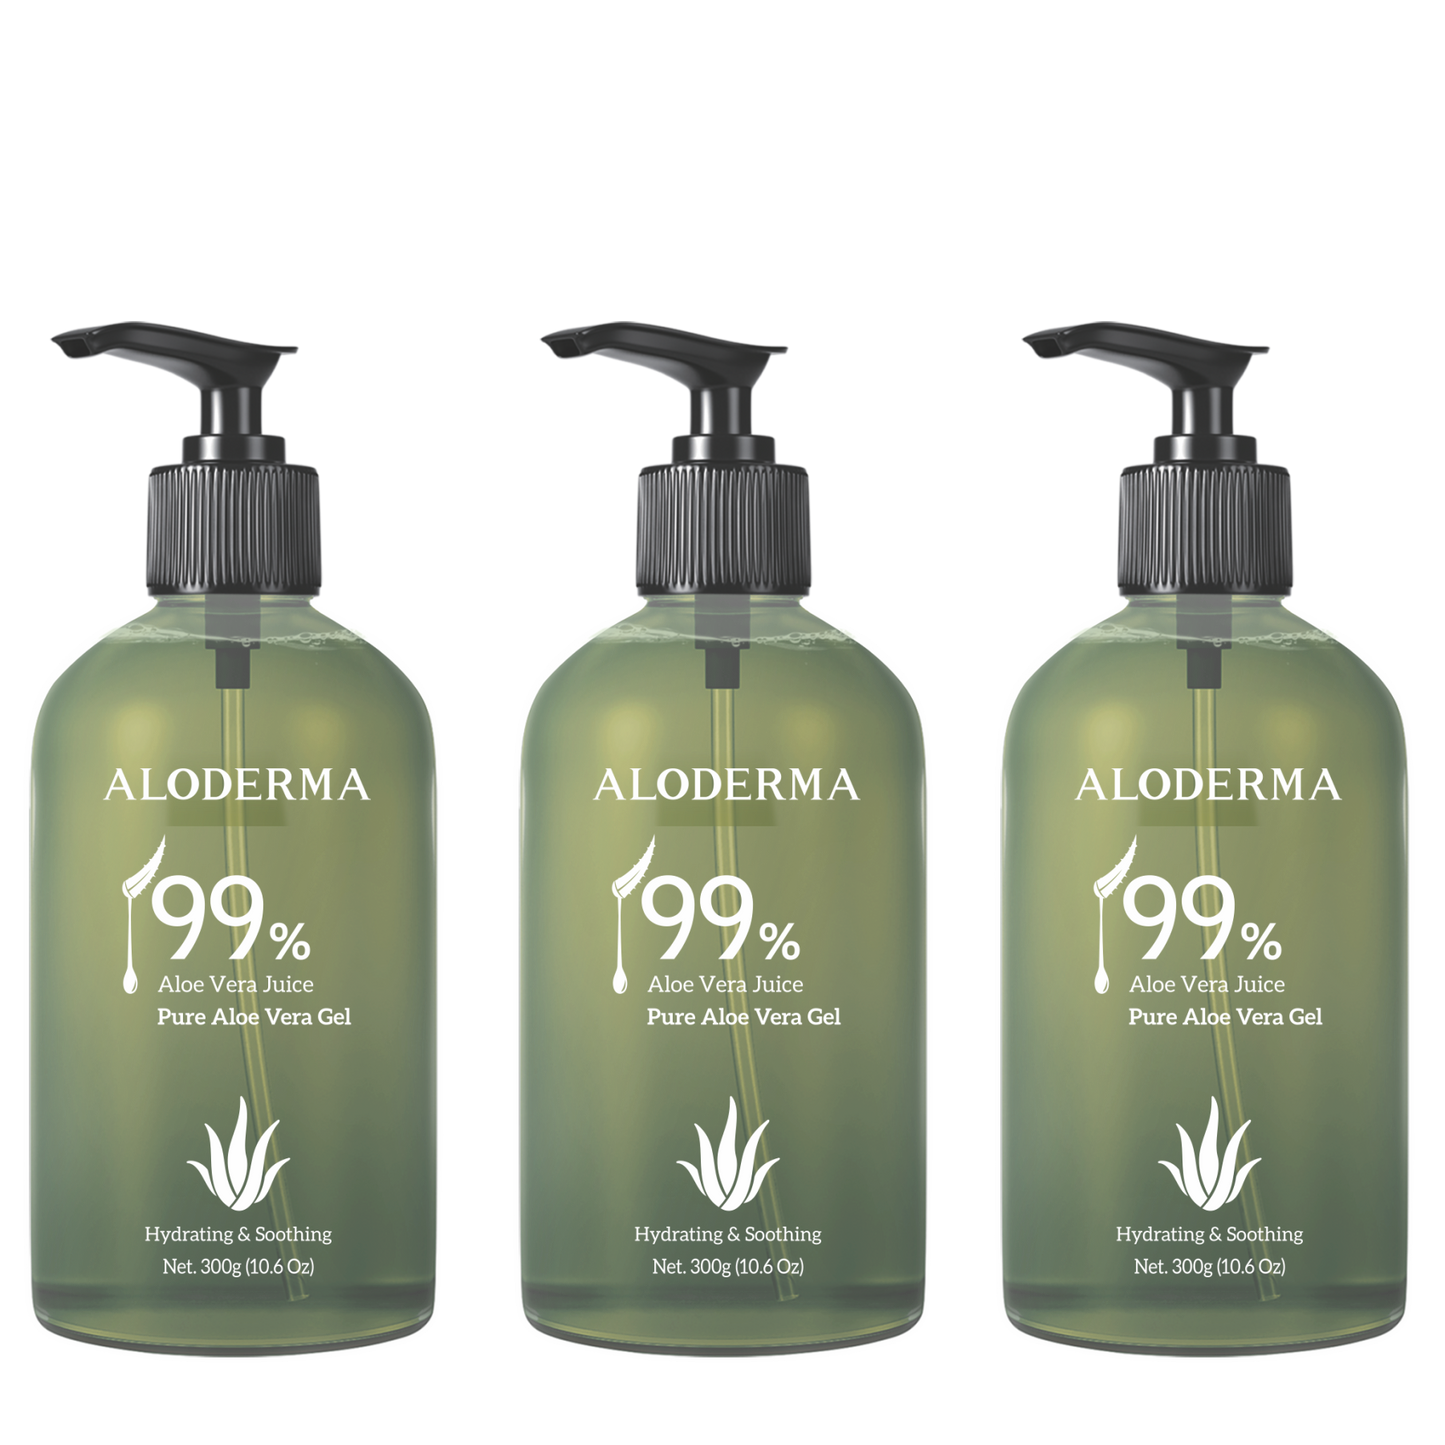 Aloderma Pure Aloe Vera Gel 300g by AloeCure